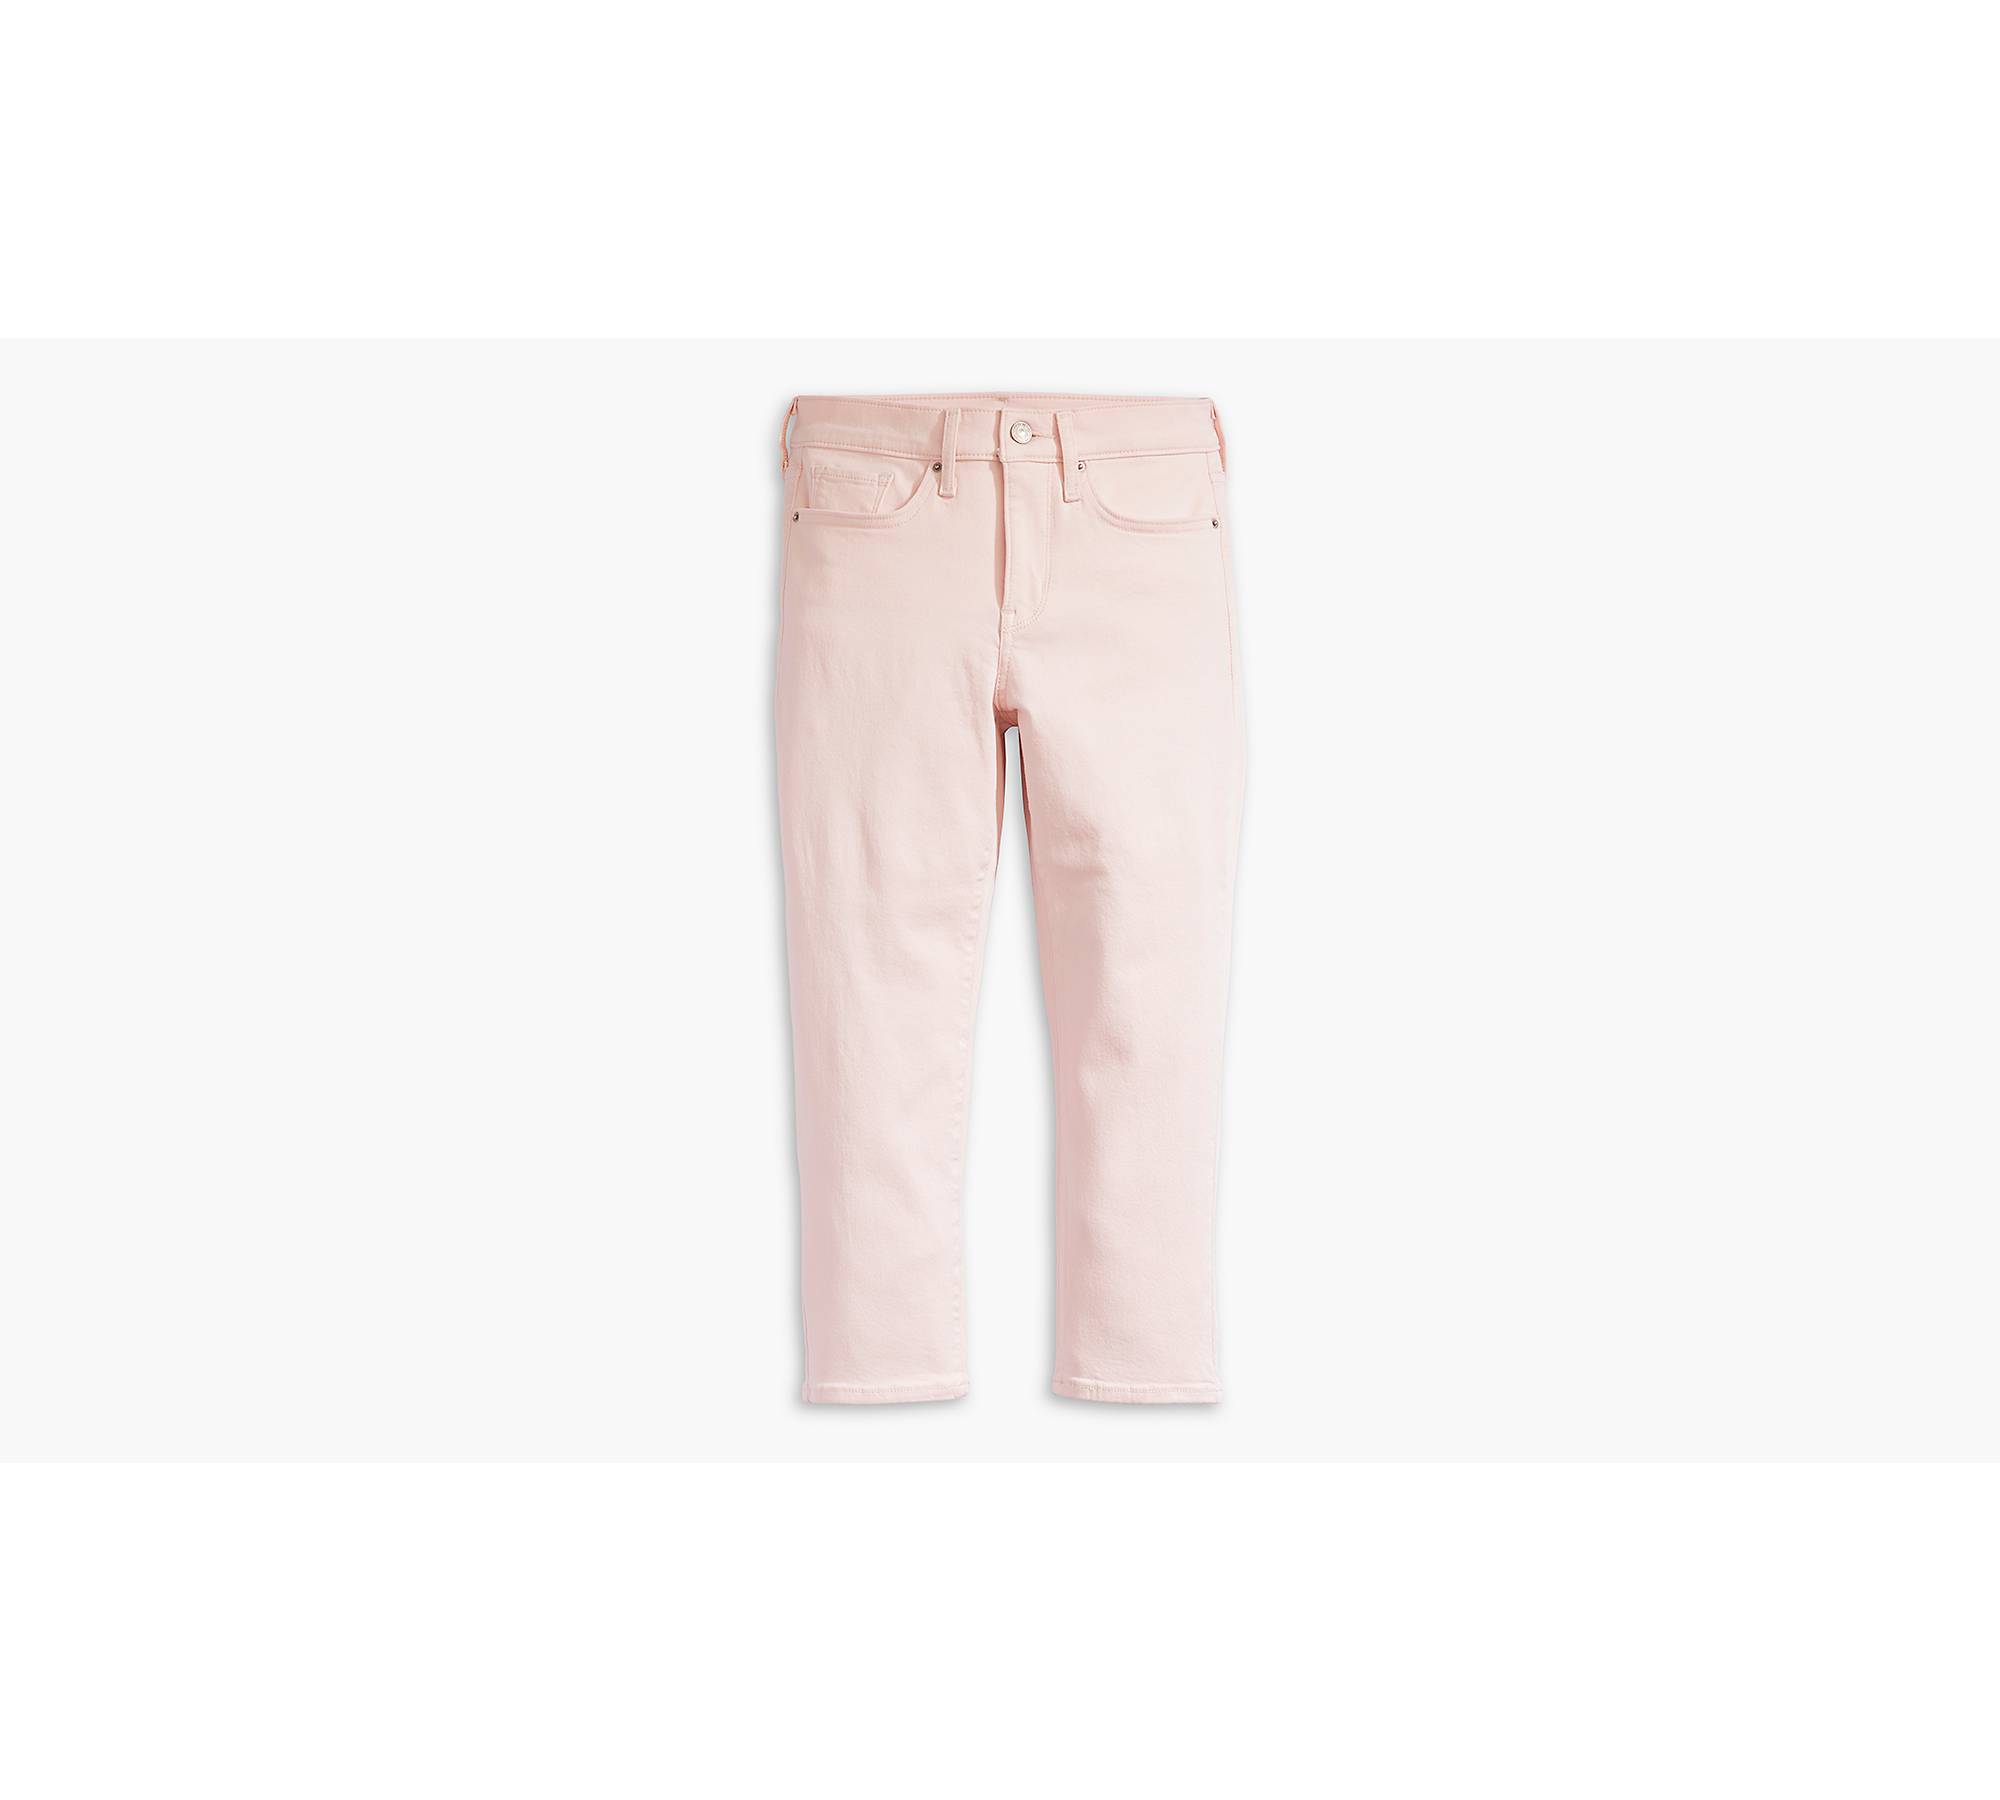 Hot Pink Women's High Waisted Denim Capri Pants Seamed Front Raw Hem –  Lookbook Store